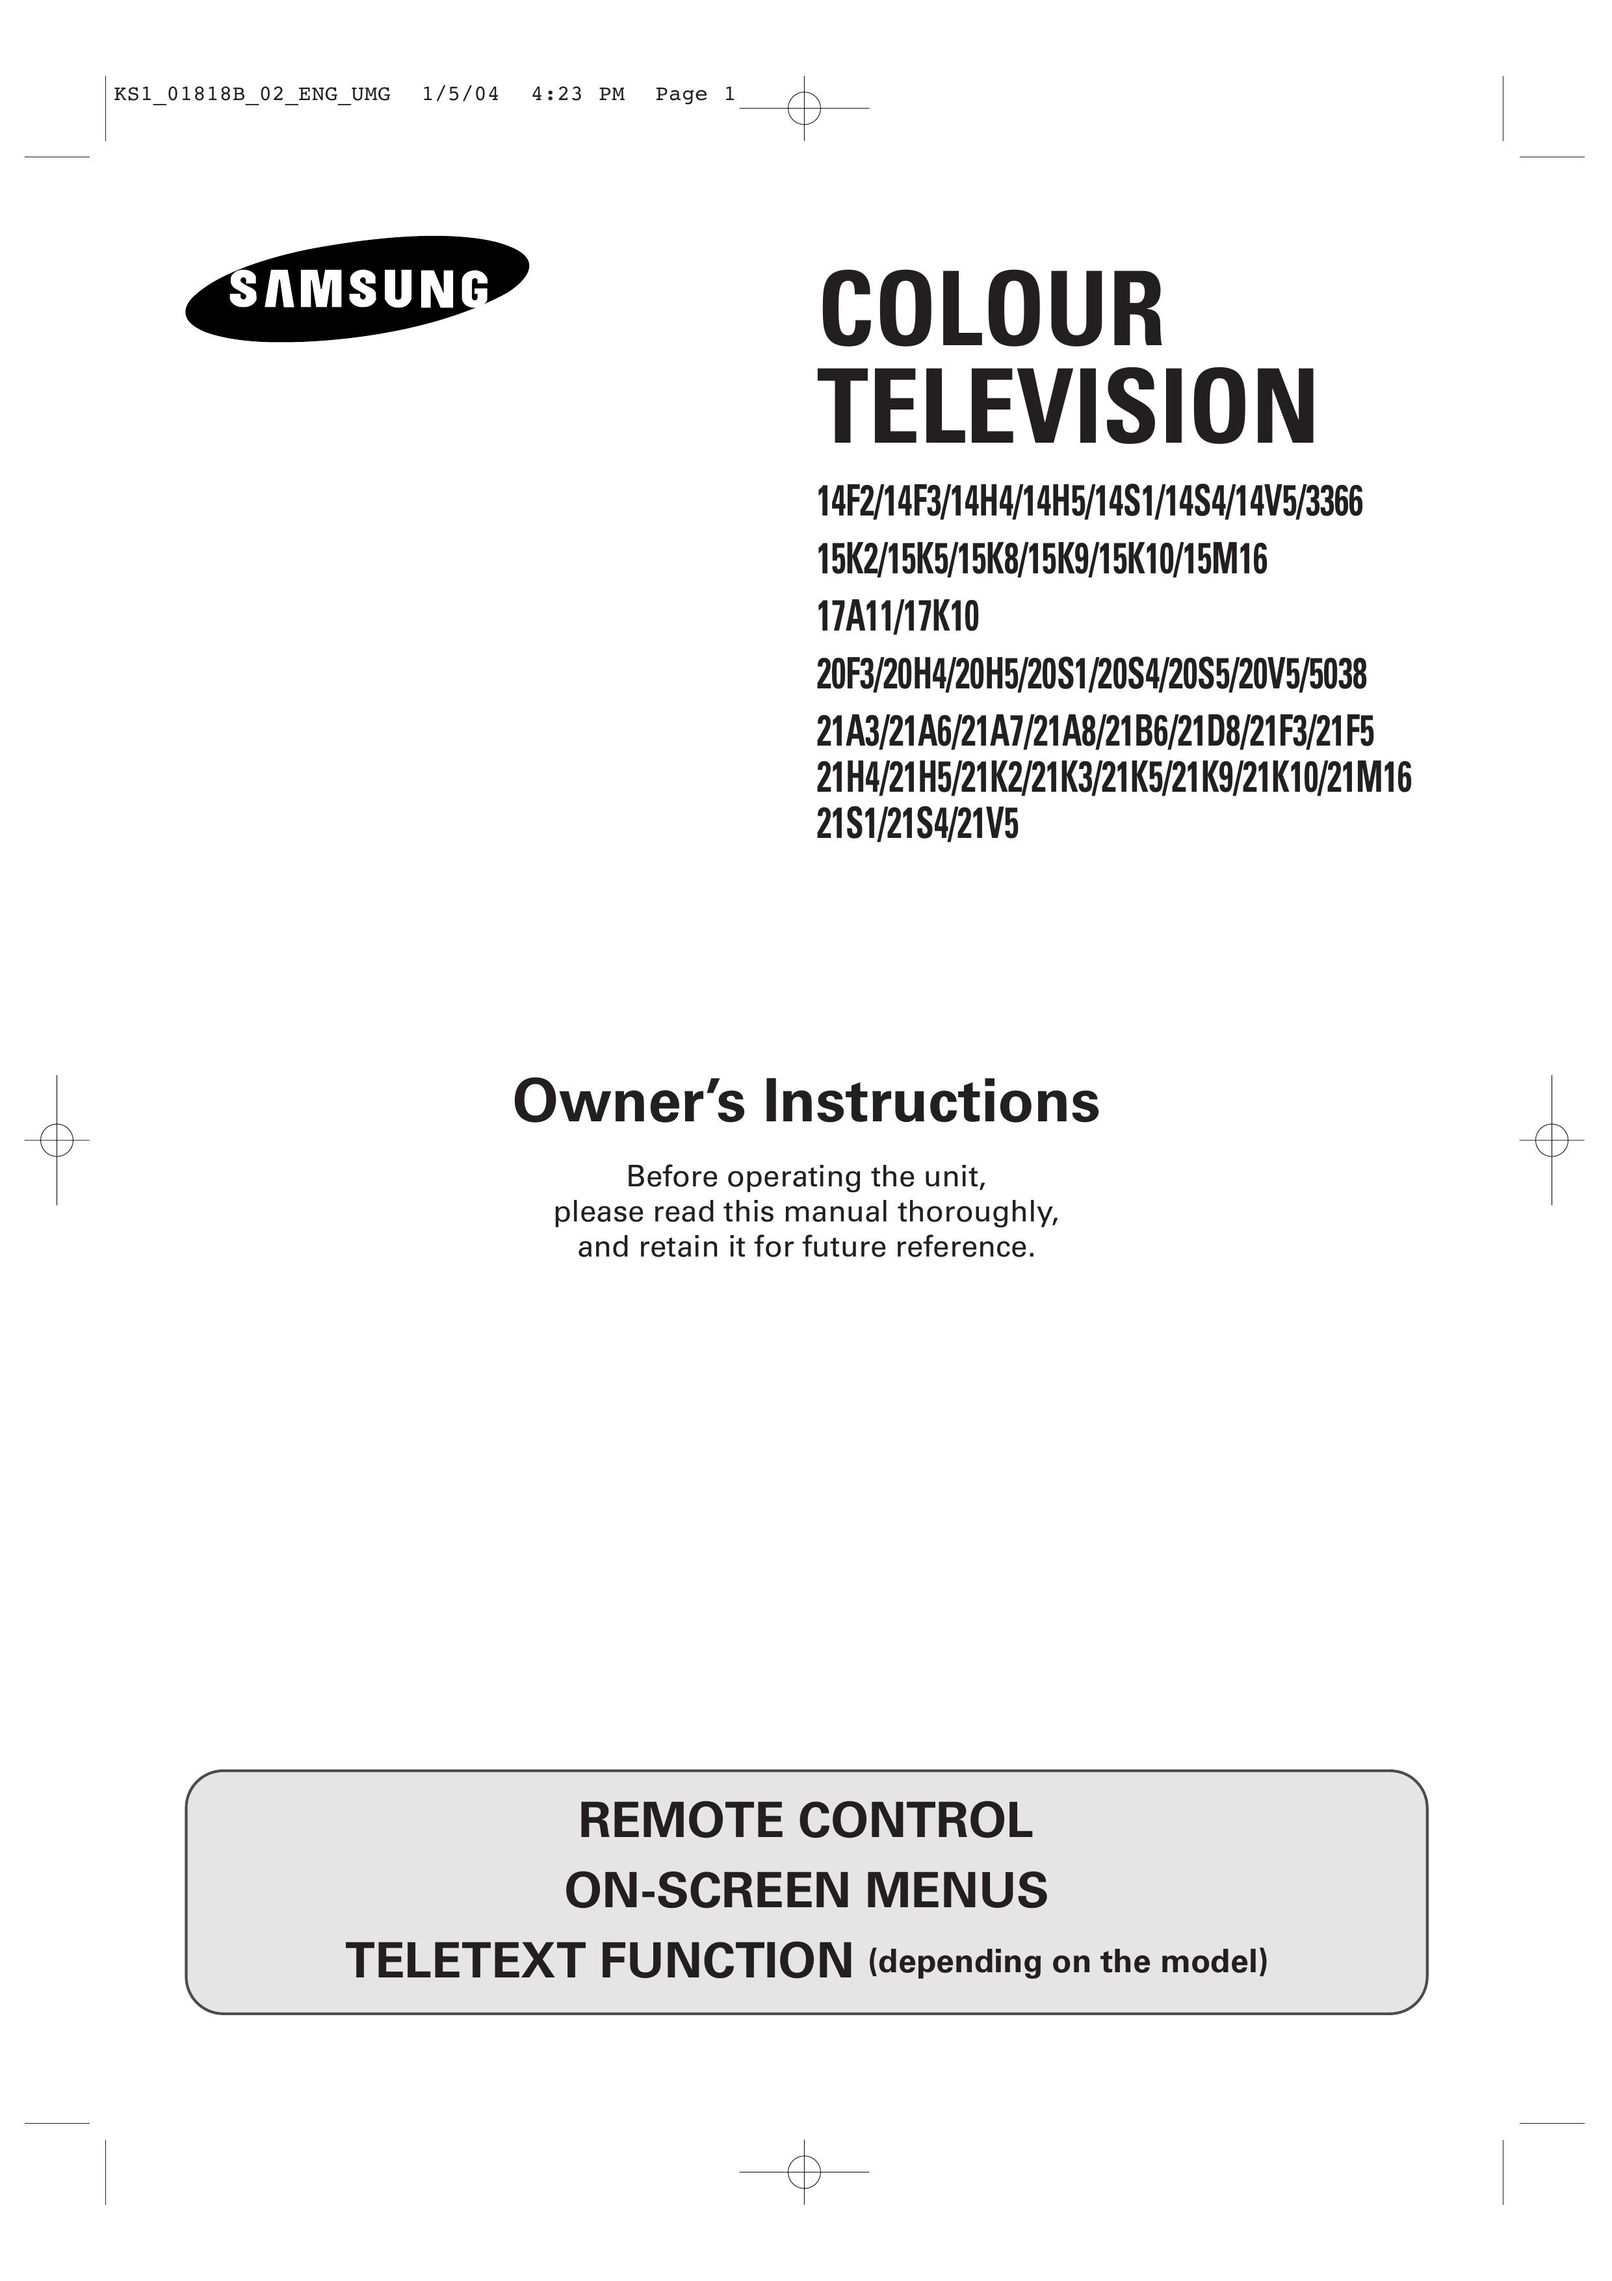 Samsung 15M16 CRT Television User Manual